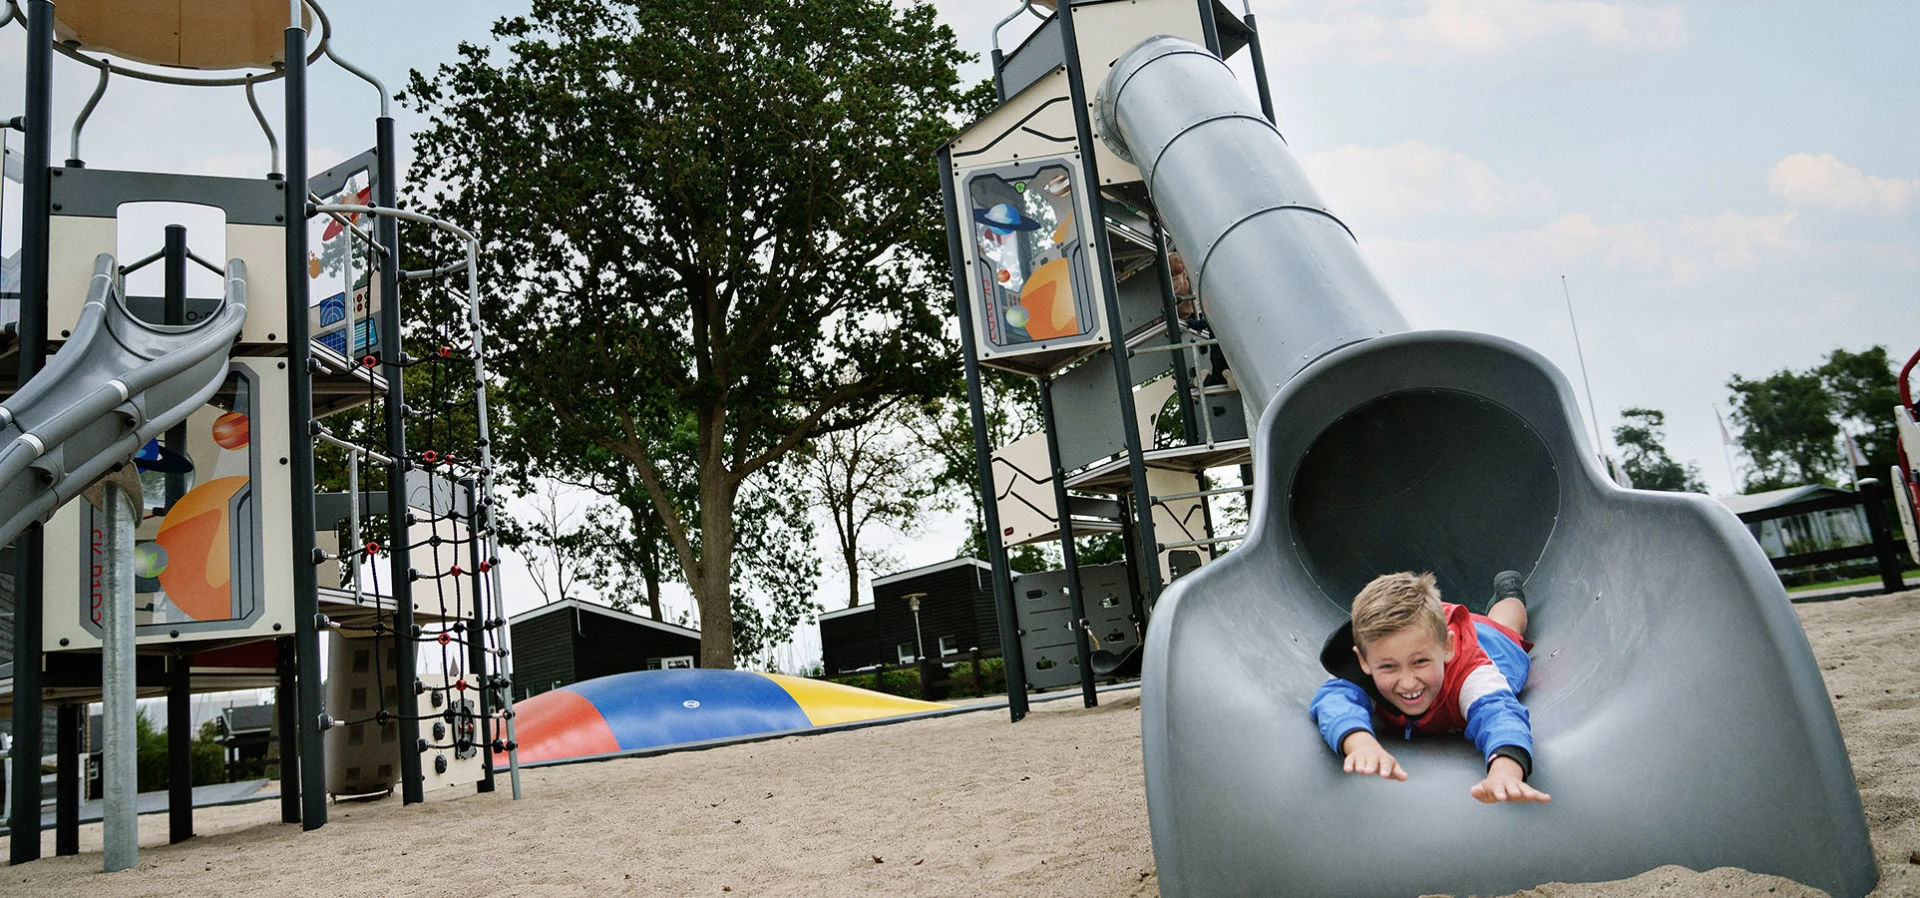 A childing sliding down a tube slide